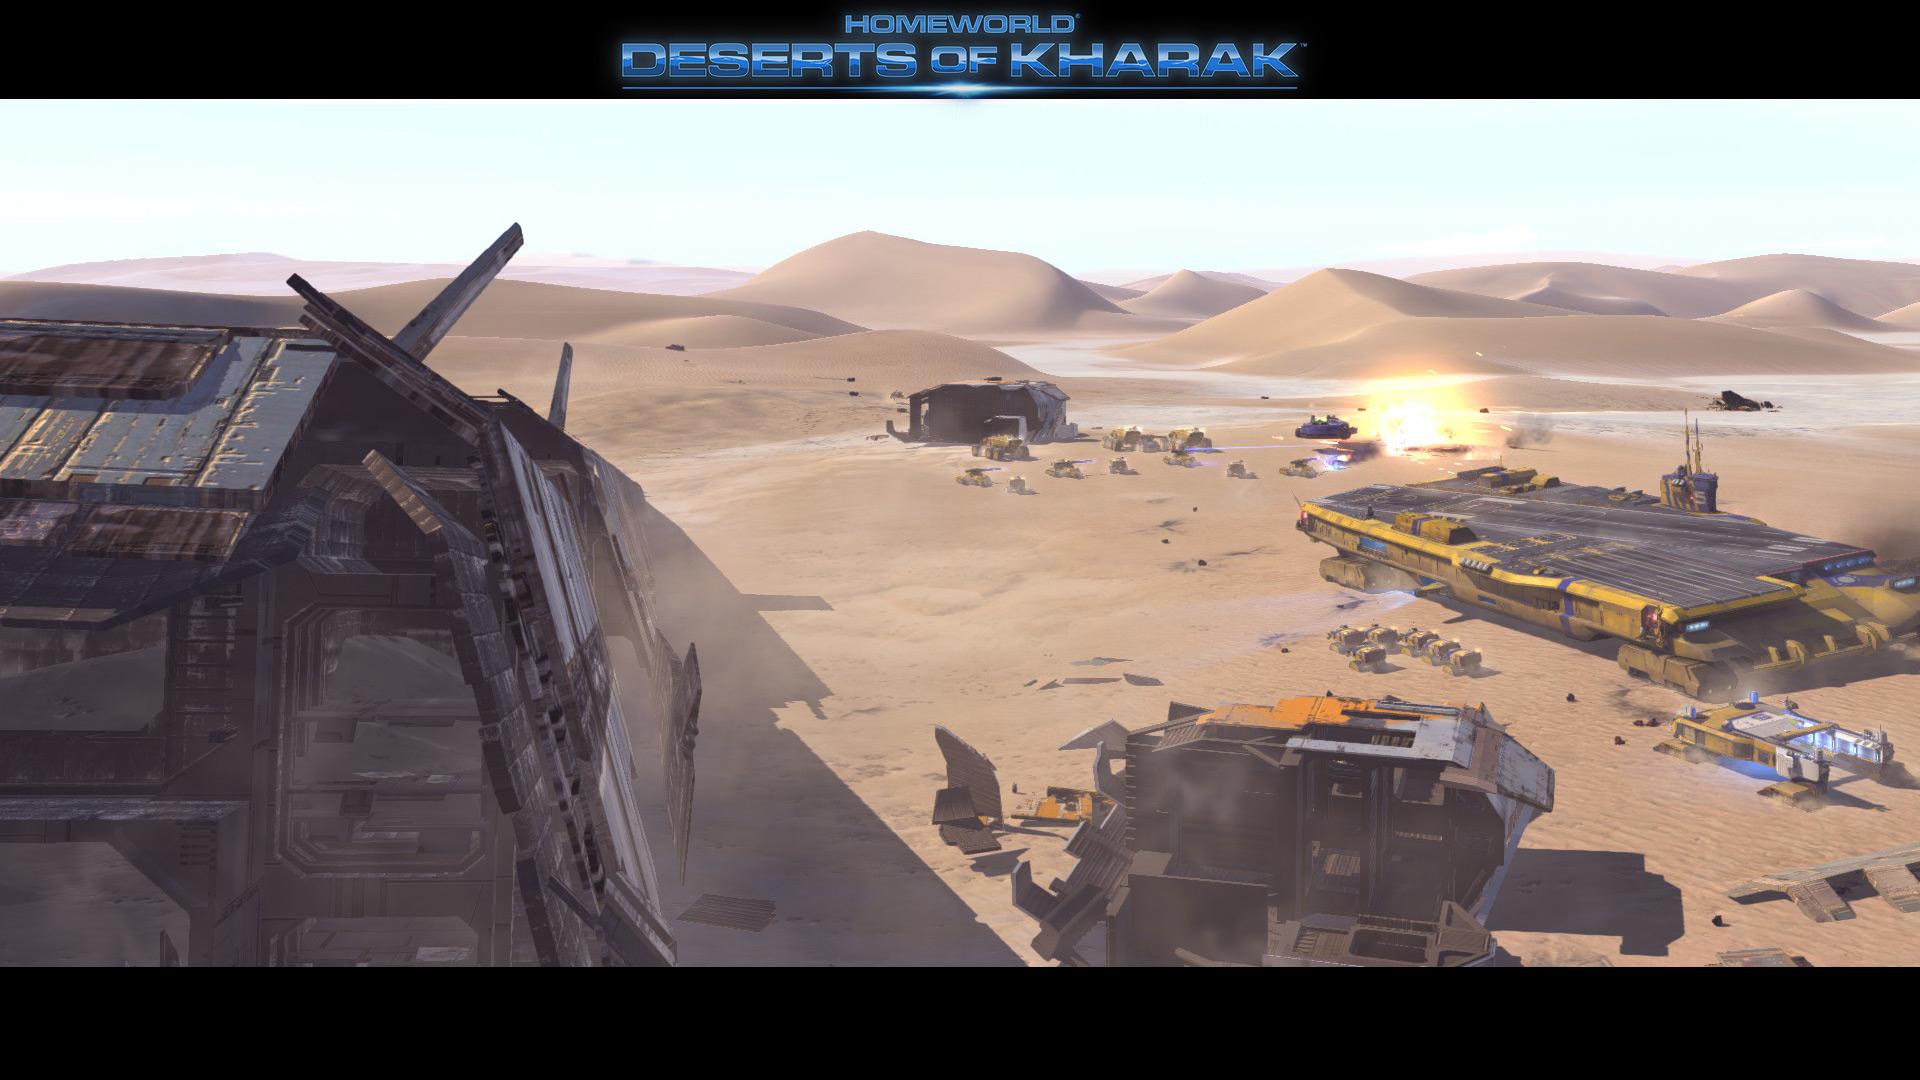 Homeworld Deserts Of Kharak at 1024 x 768 size wallpapers HD quality